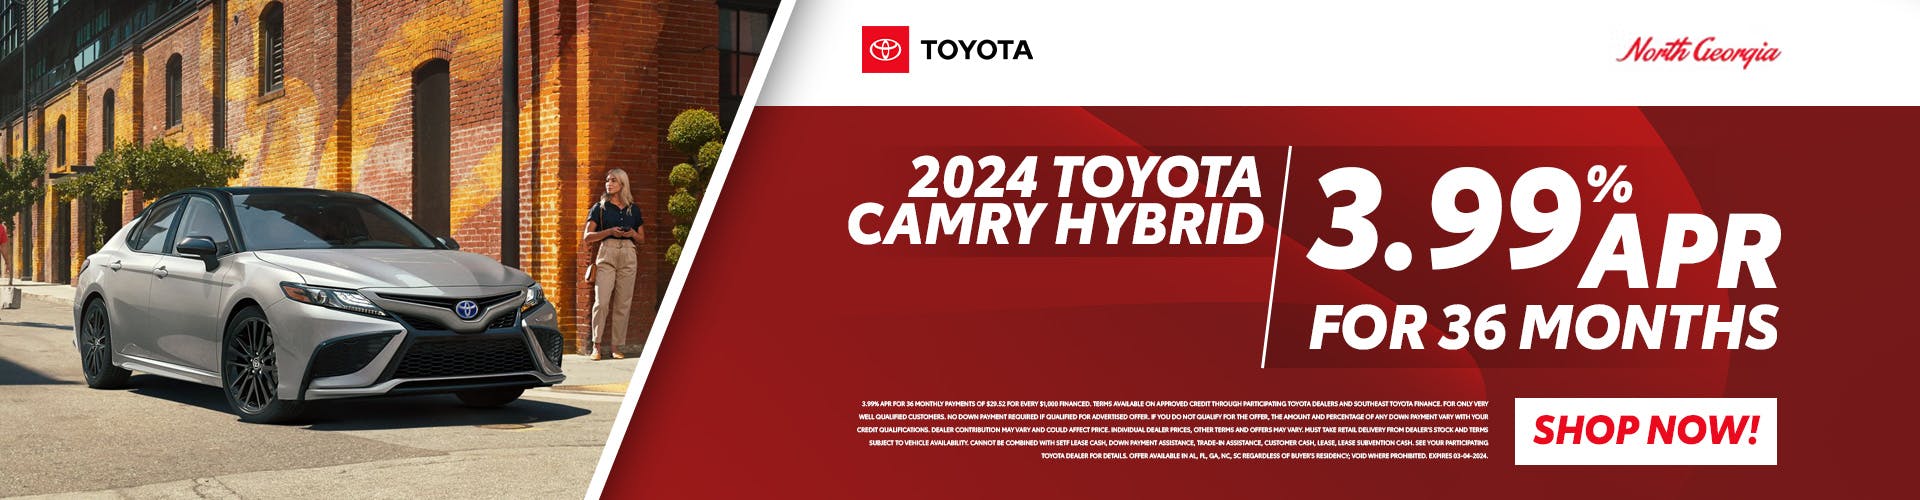 2024 Toyota Camry Hybrid Special – Feb